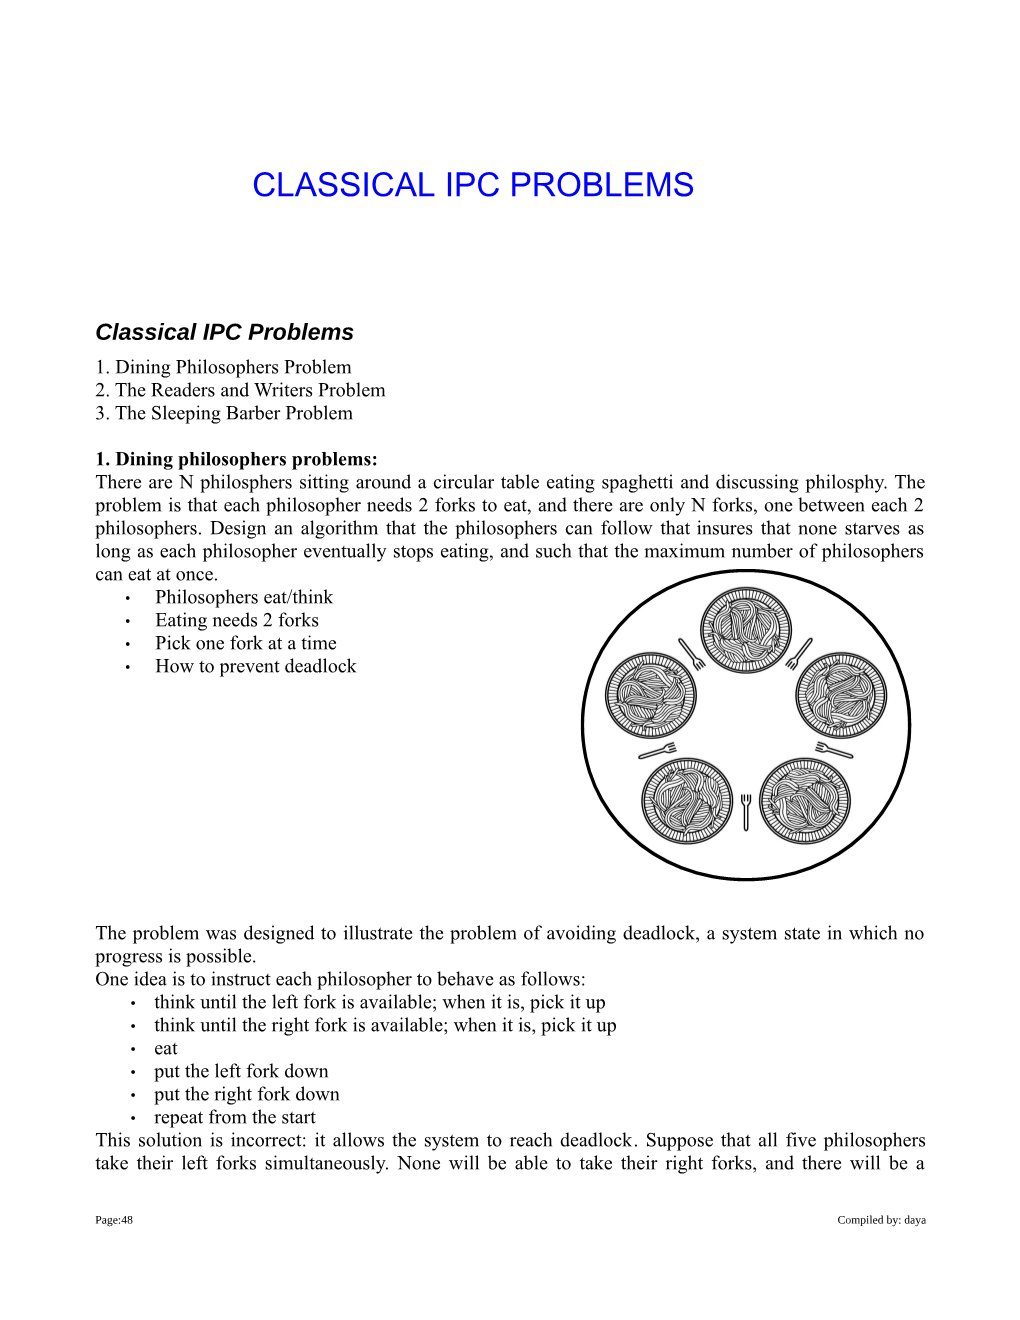 Classical IPC Problems 1